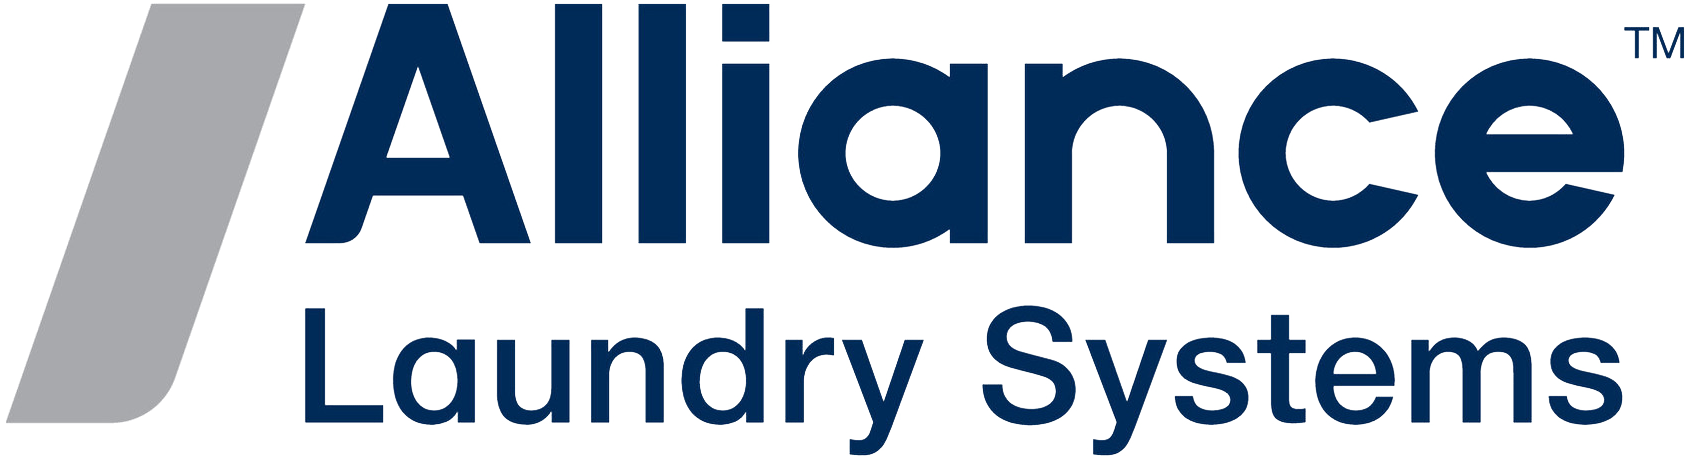 Alliance Laundry Systems logo-1